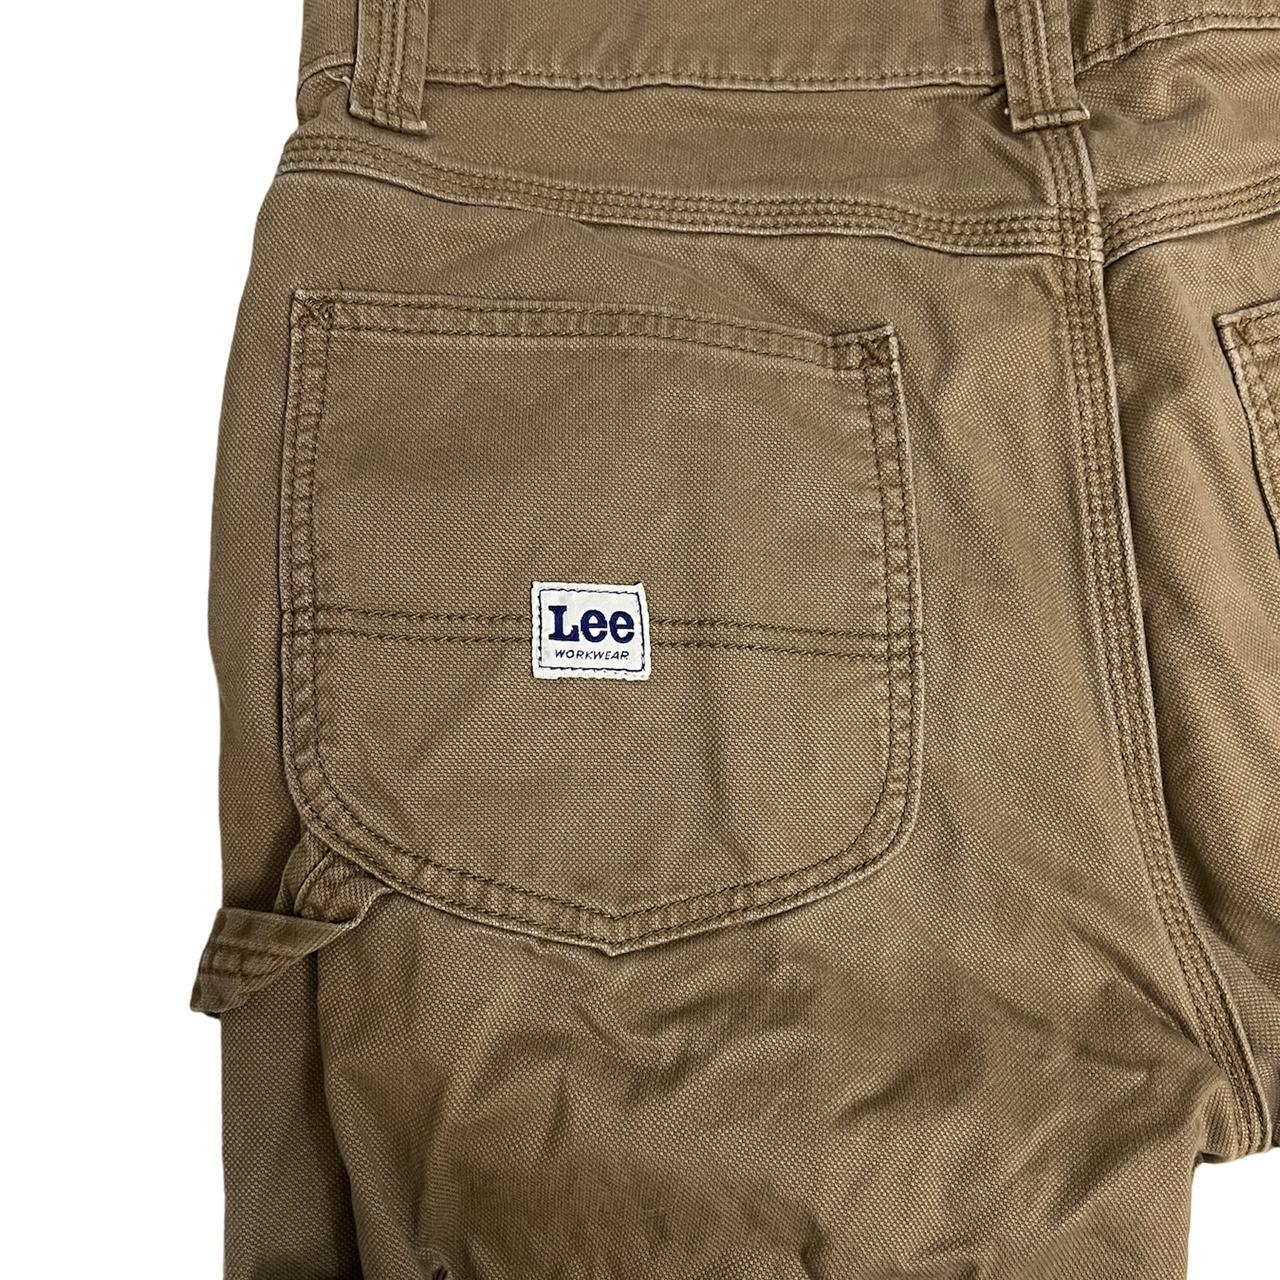 Lee Men's Brown and Tan Trousers (3)